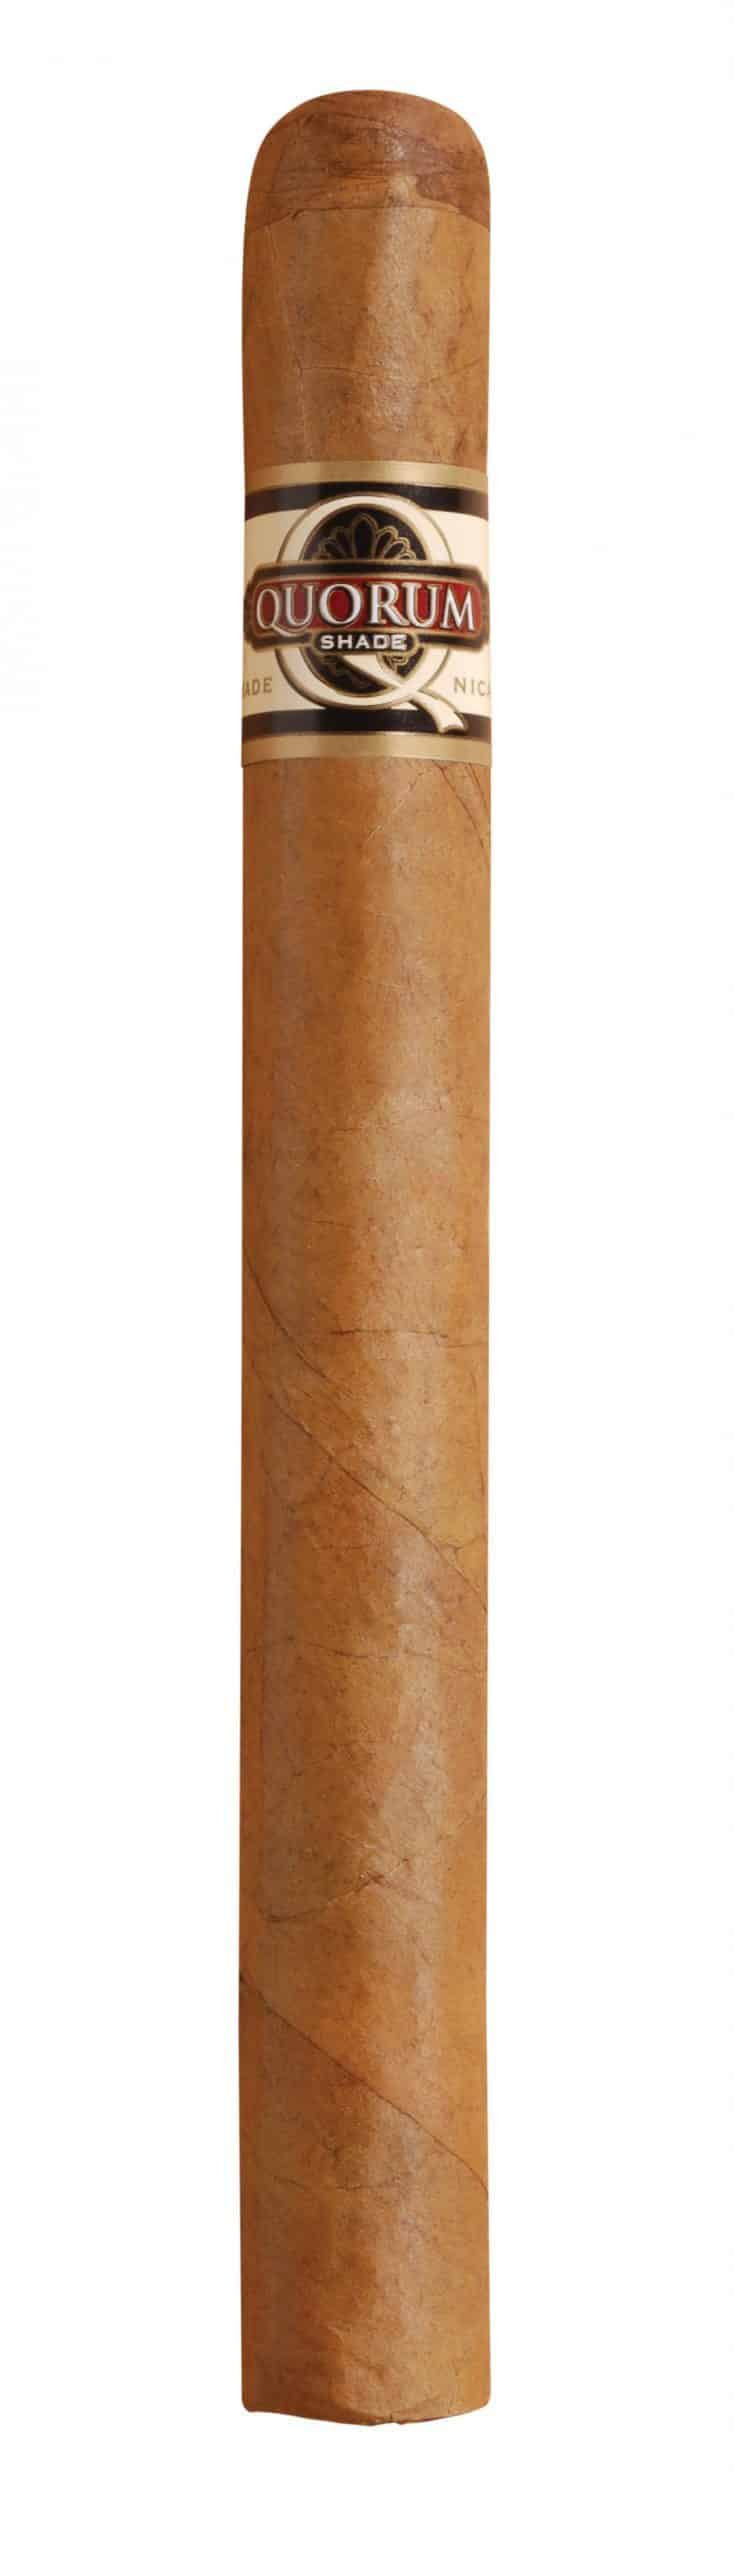 quorum shade churchill single cigar